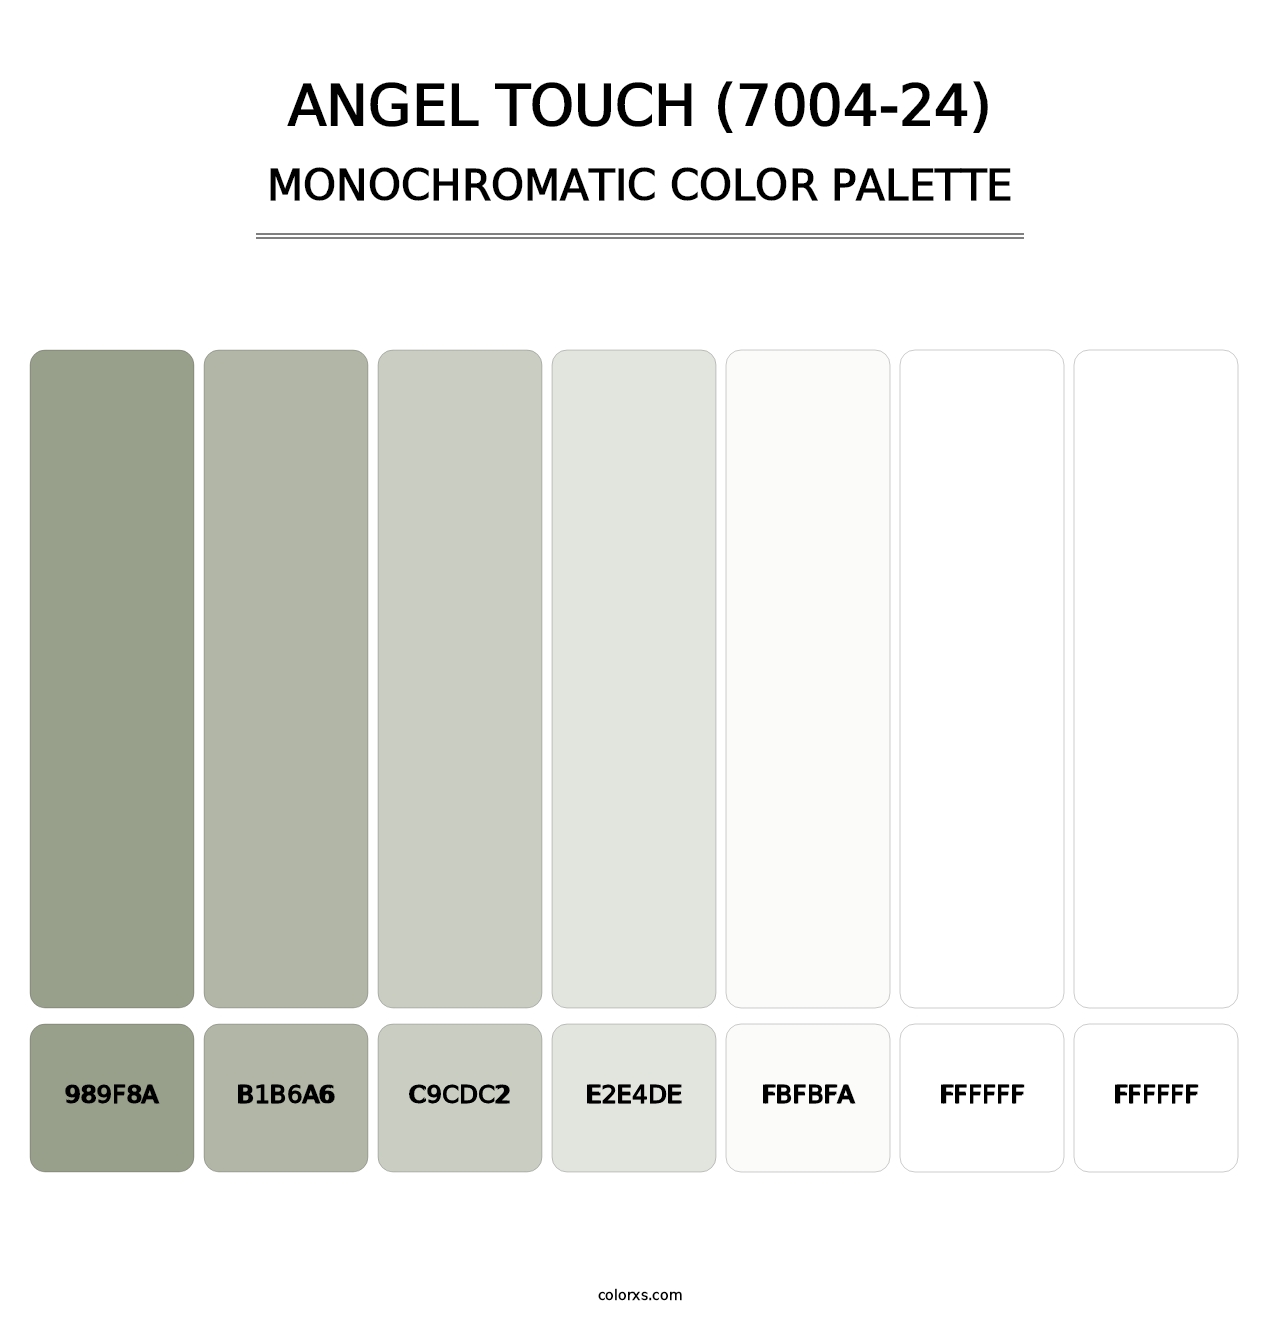 Angel Touch (7004-24) - Monochromatic Color Palette